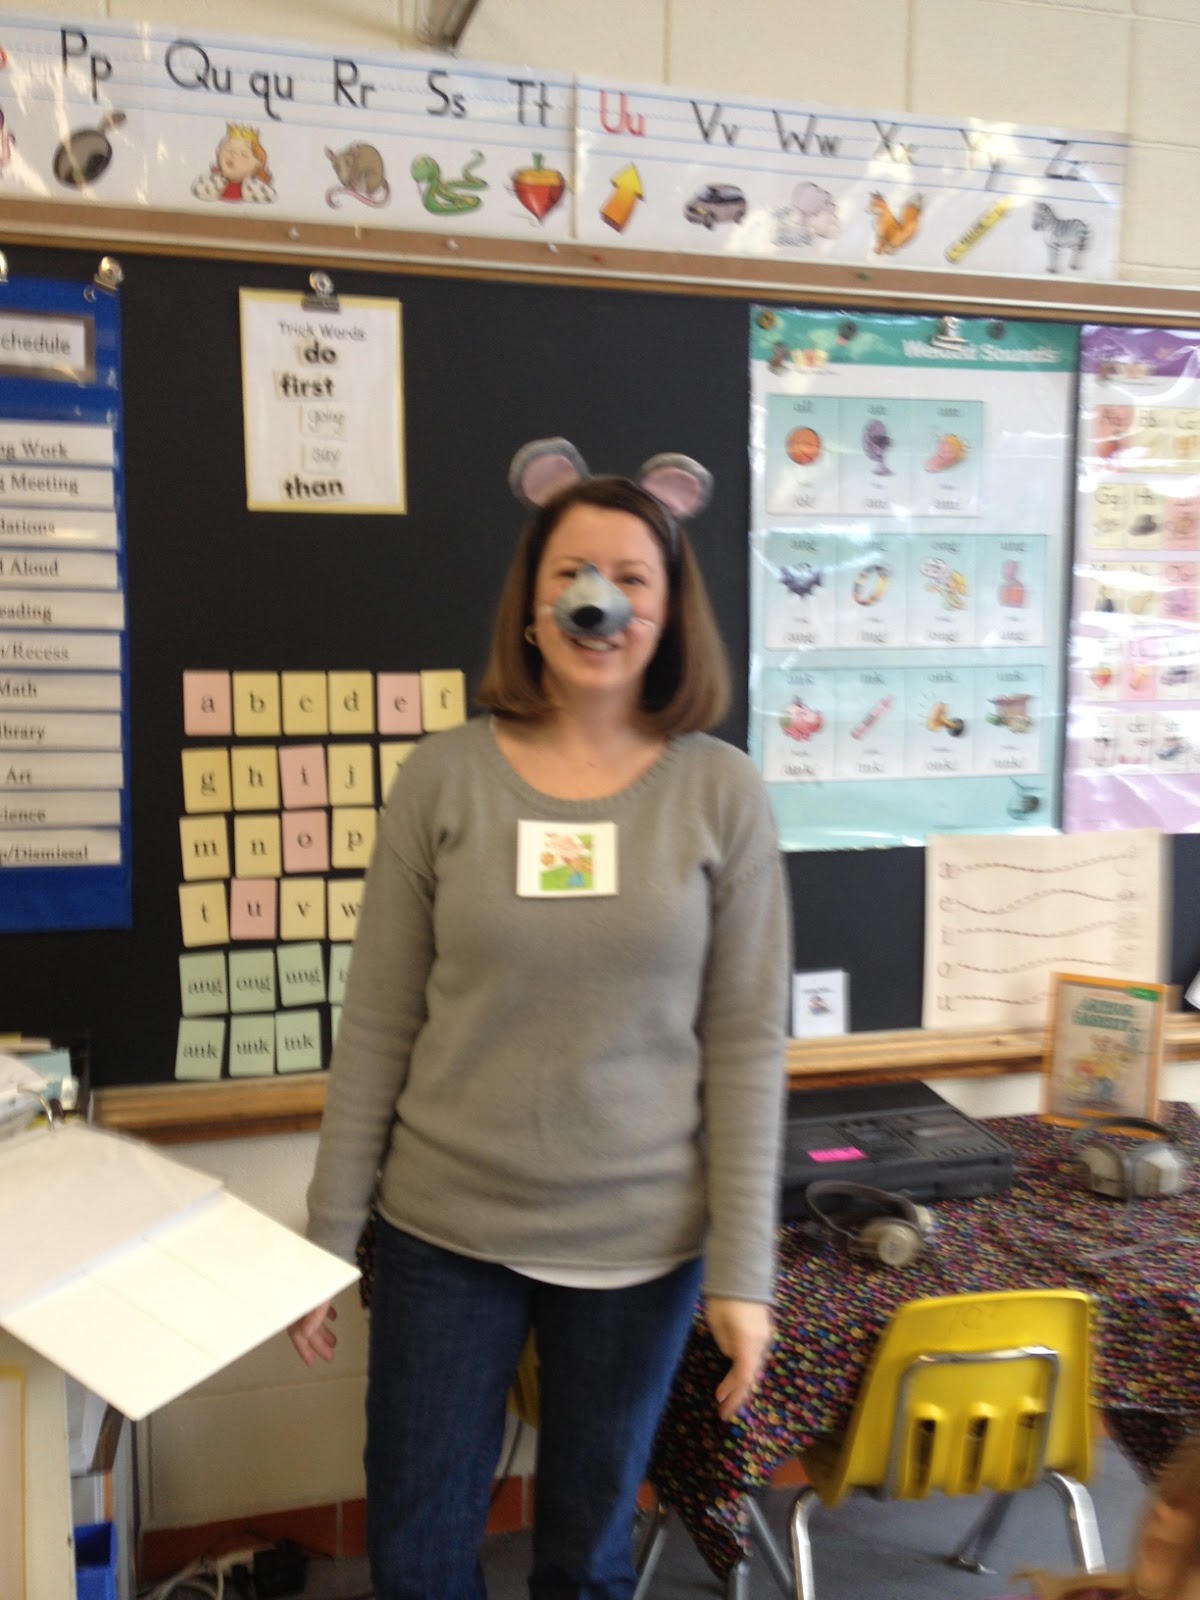 Pine Glen Elementary School Principal's Blog: Favorite Book Character Day